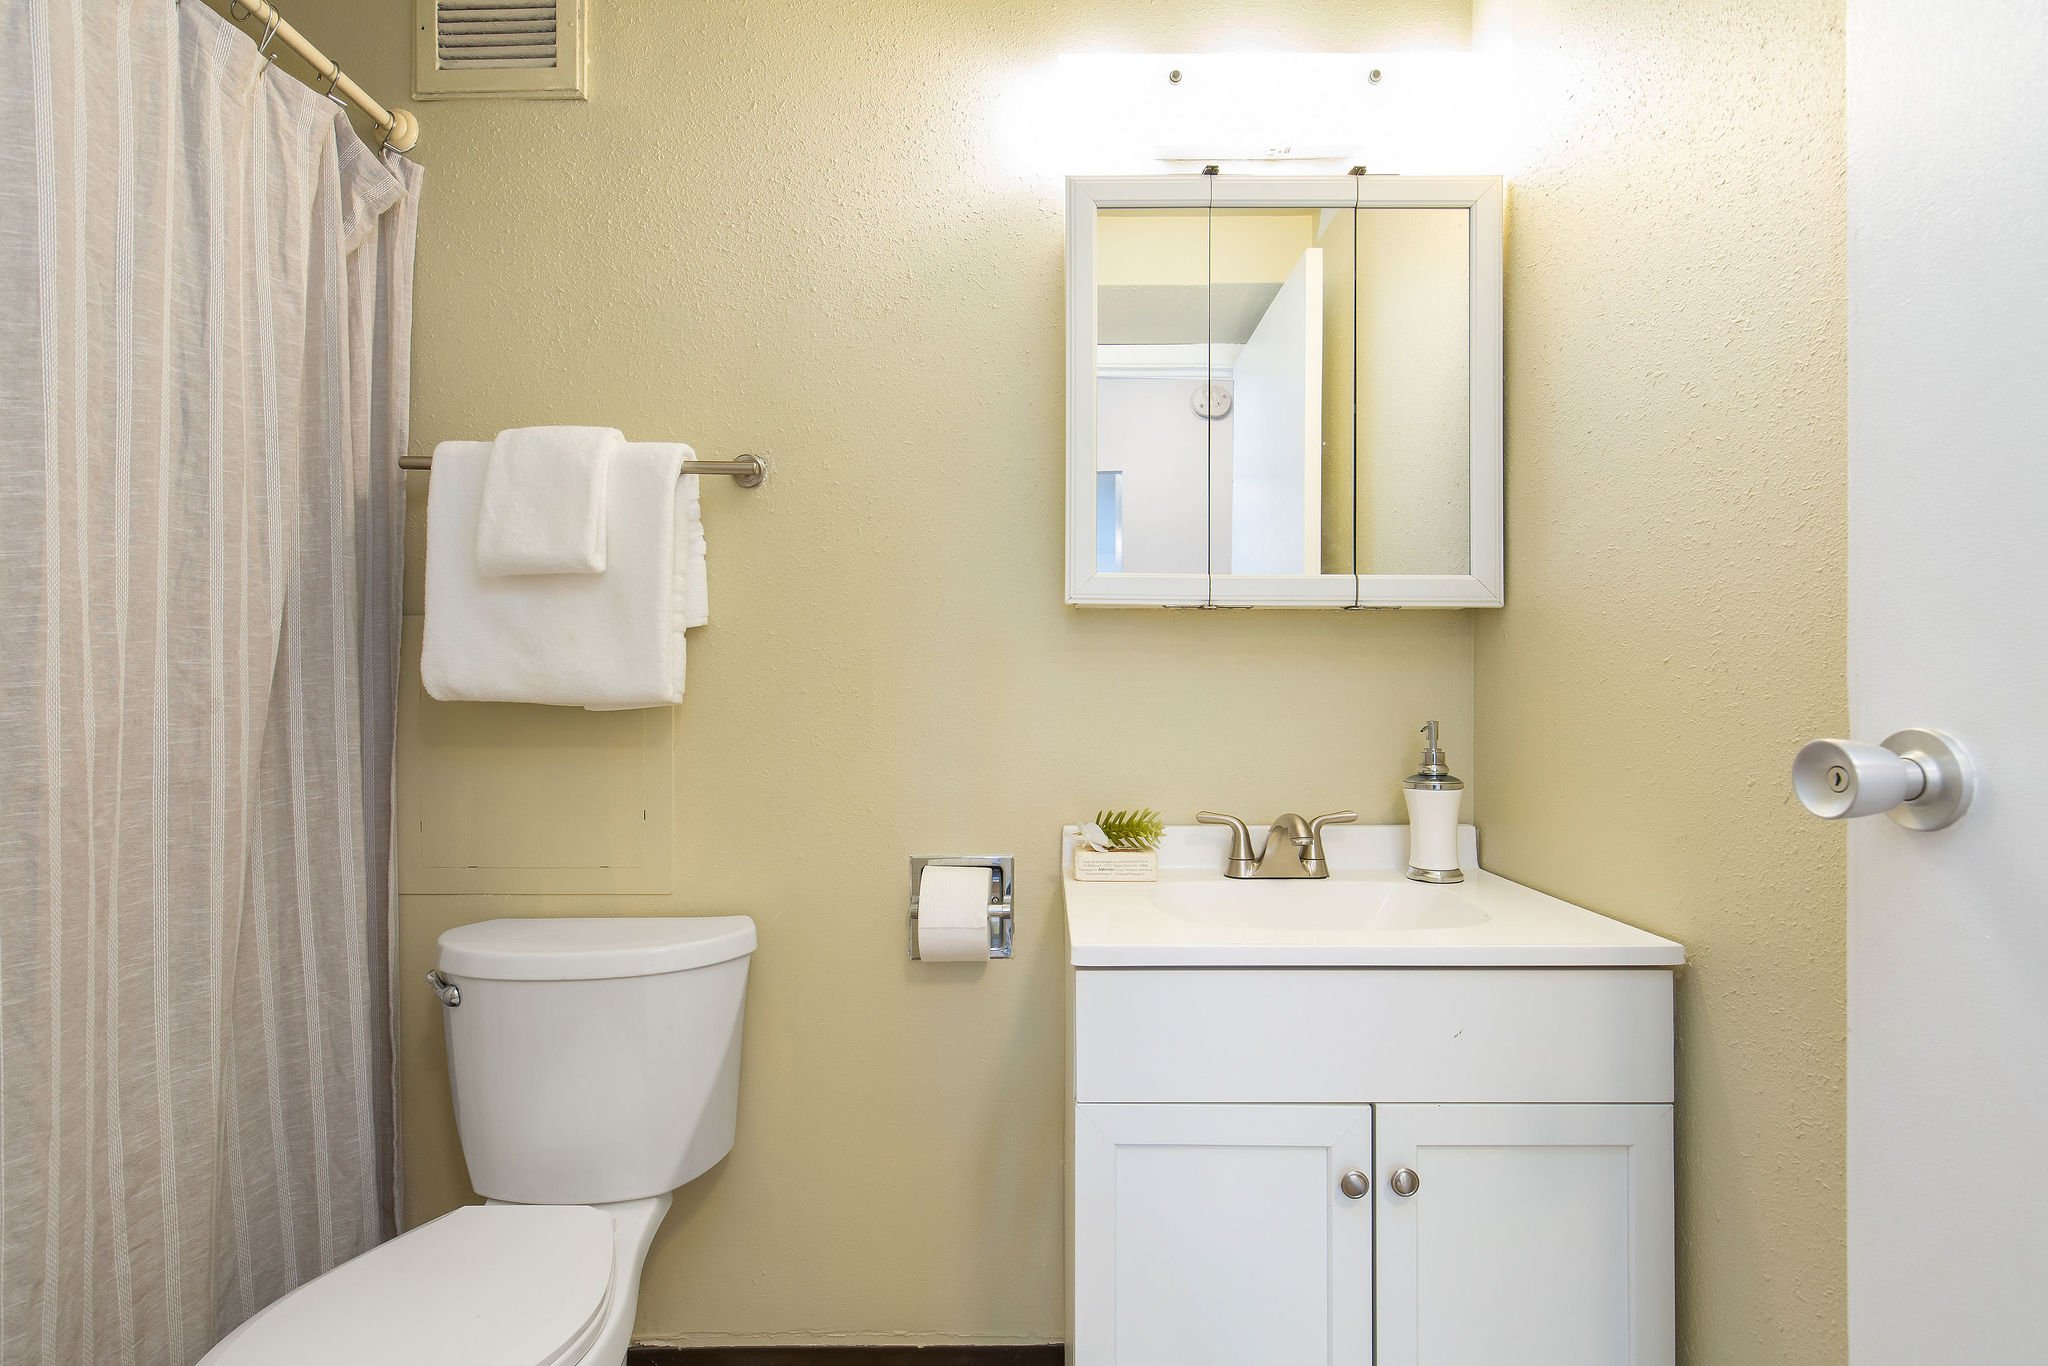  image description: interior of bathroom with bathtub shower combo 